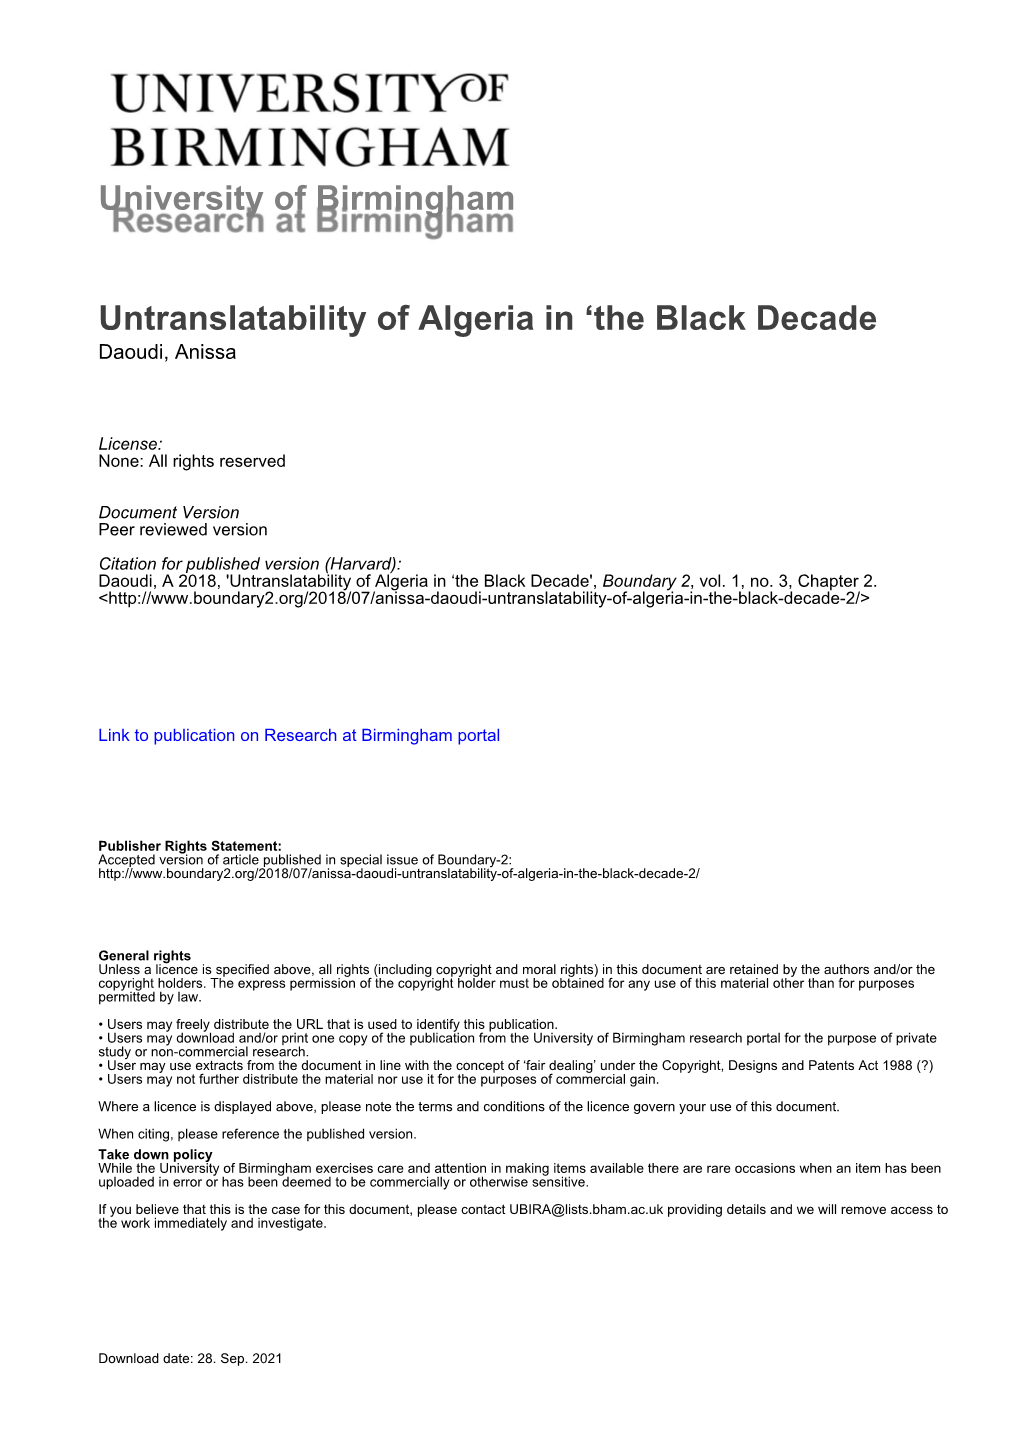 University of Birmingham Untranslatability of Algeria in 'The Black Decade